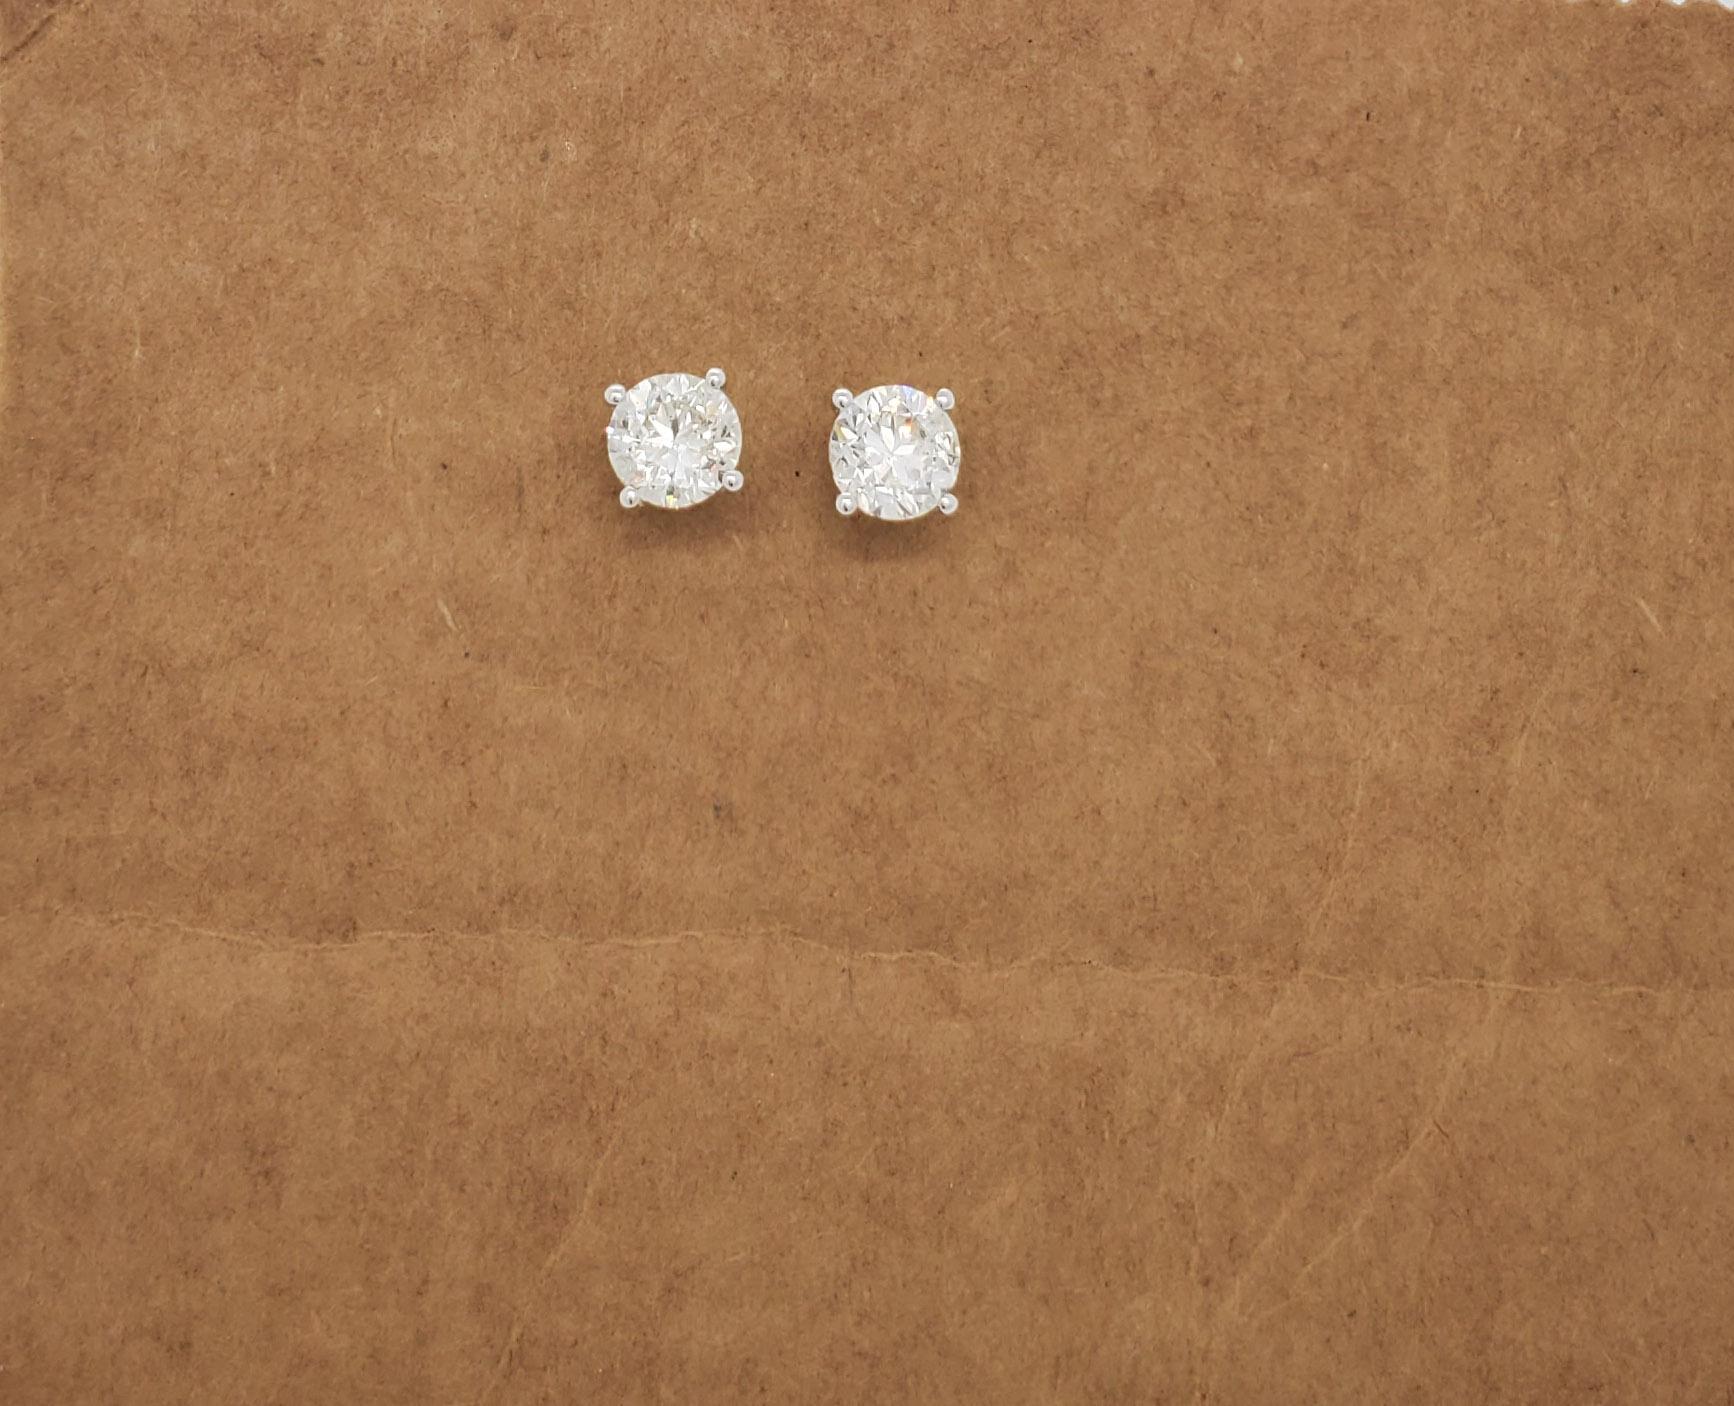 Round Cut 2 Carat White Diamond Studs in 14k White Gold